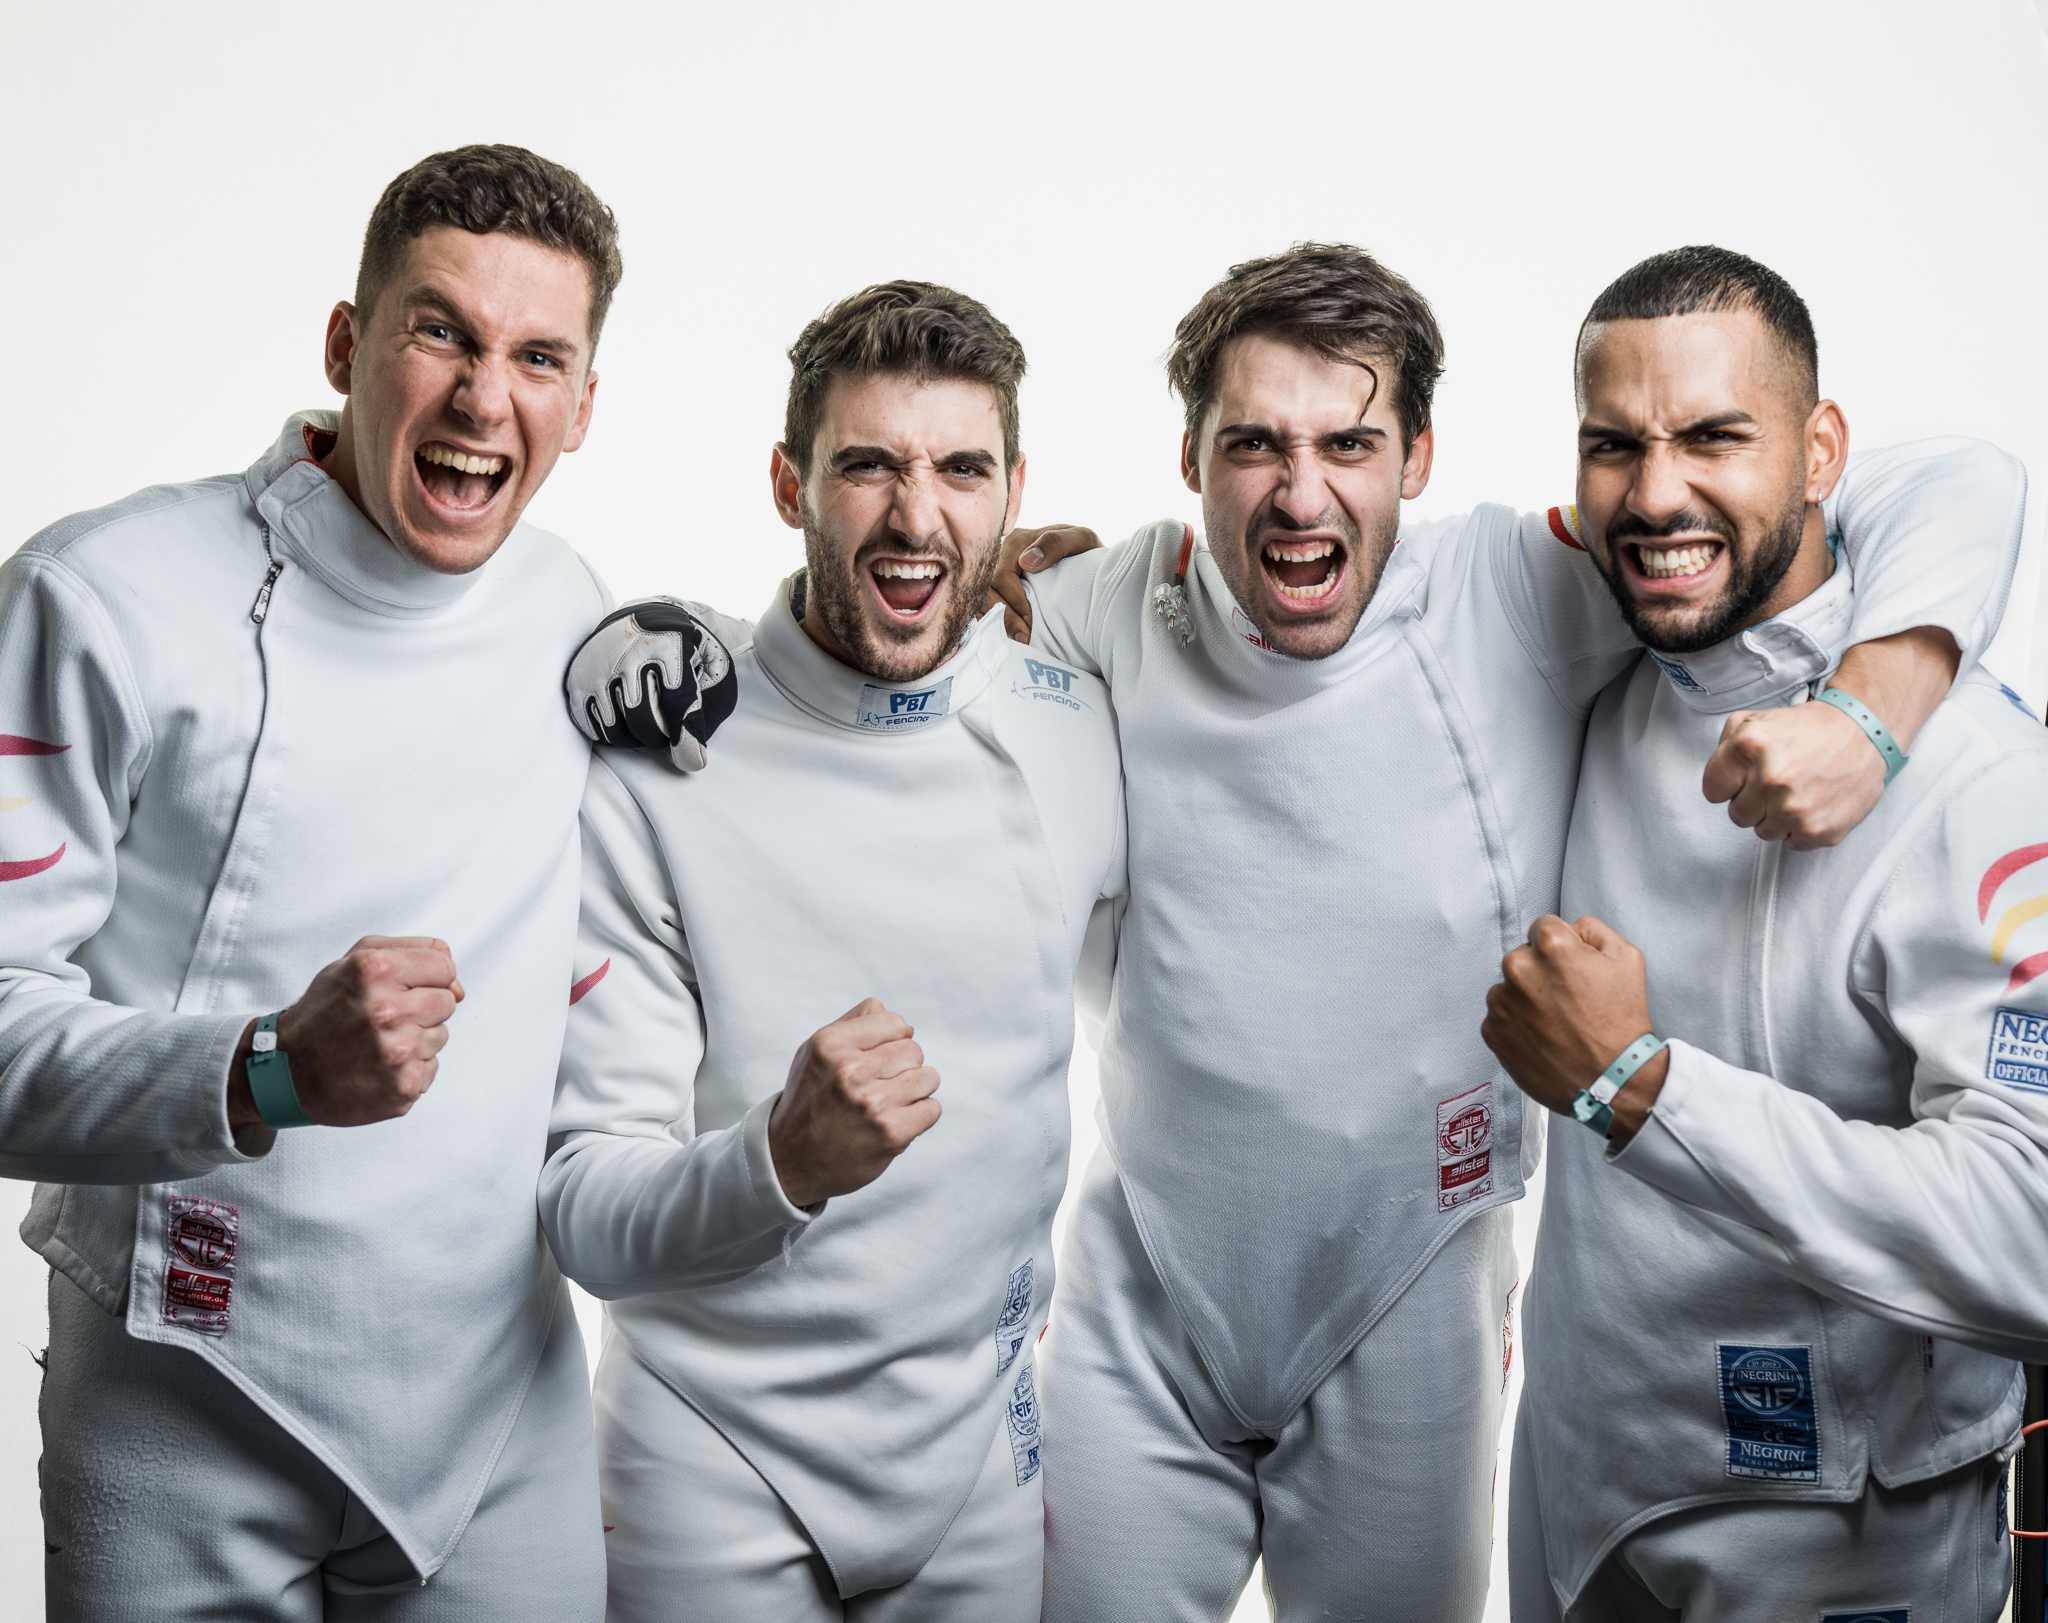 Gruppenportrait vom Team Espagna Spain Fencing am Berne World Cup.